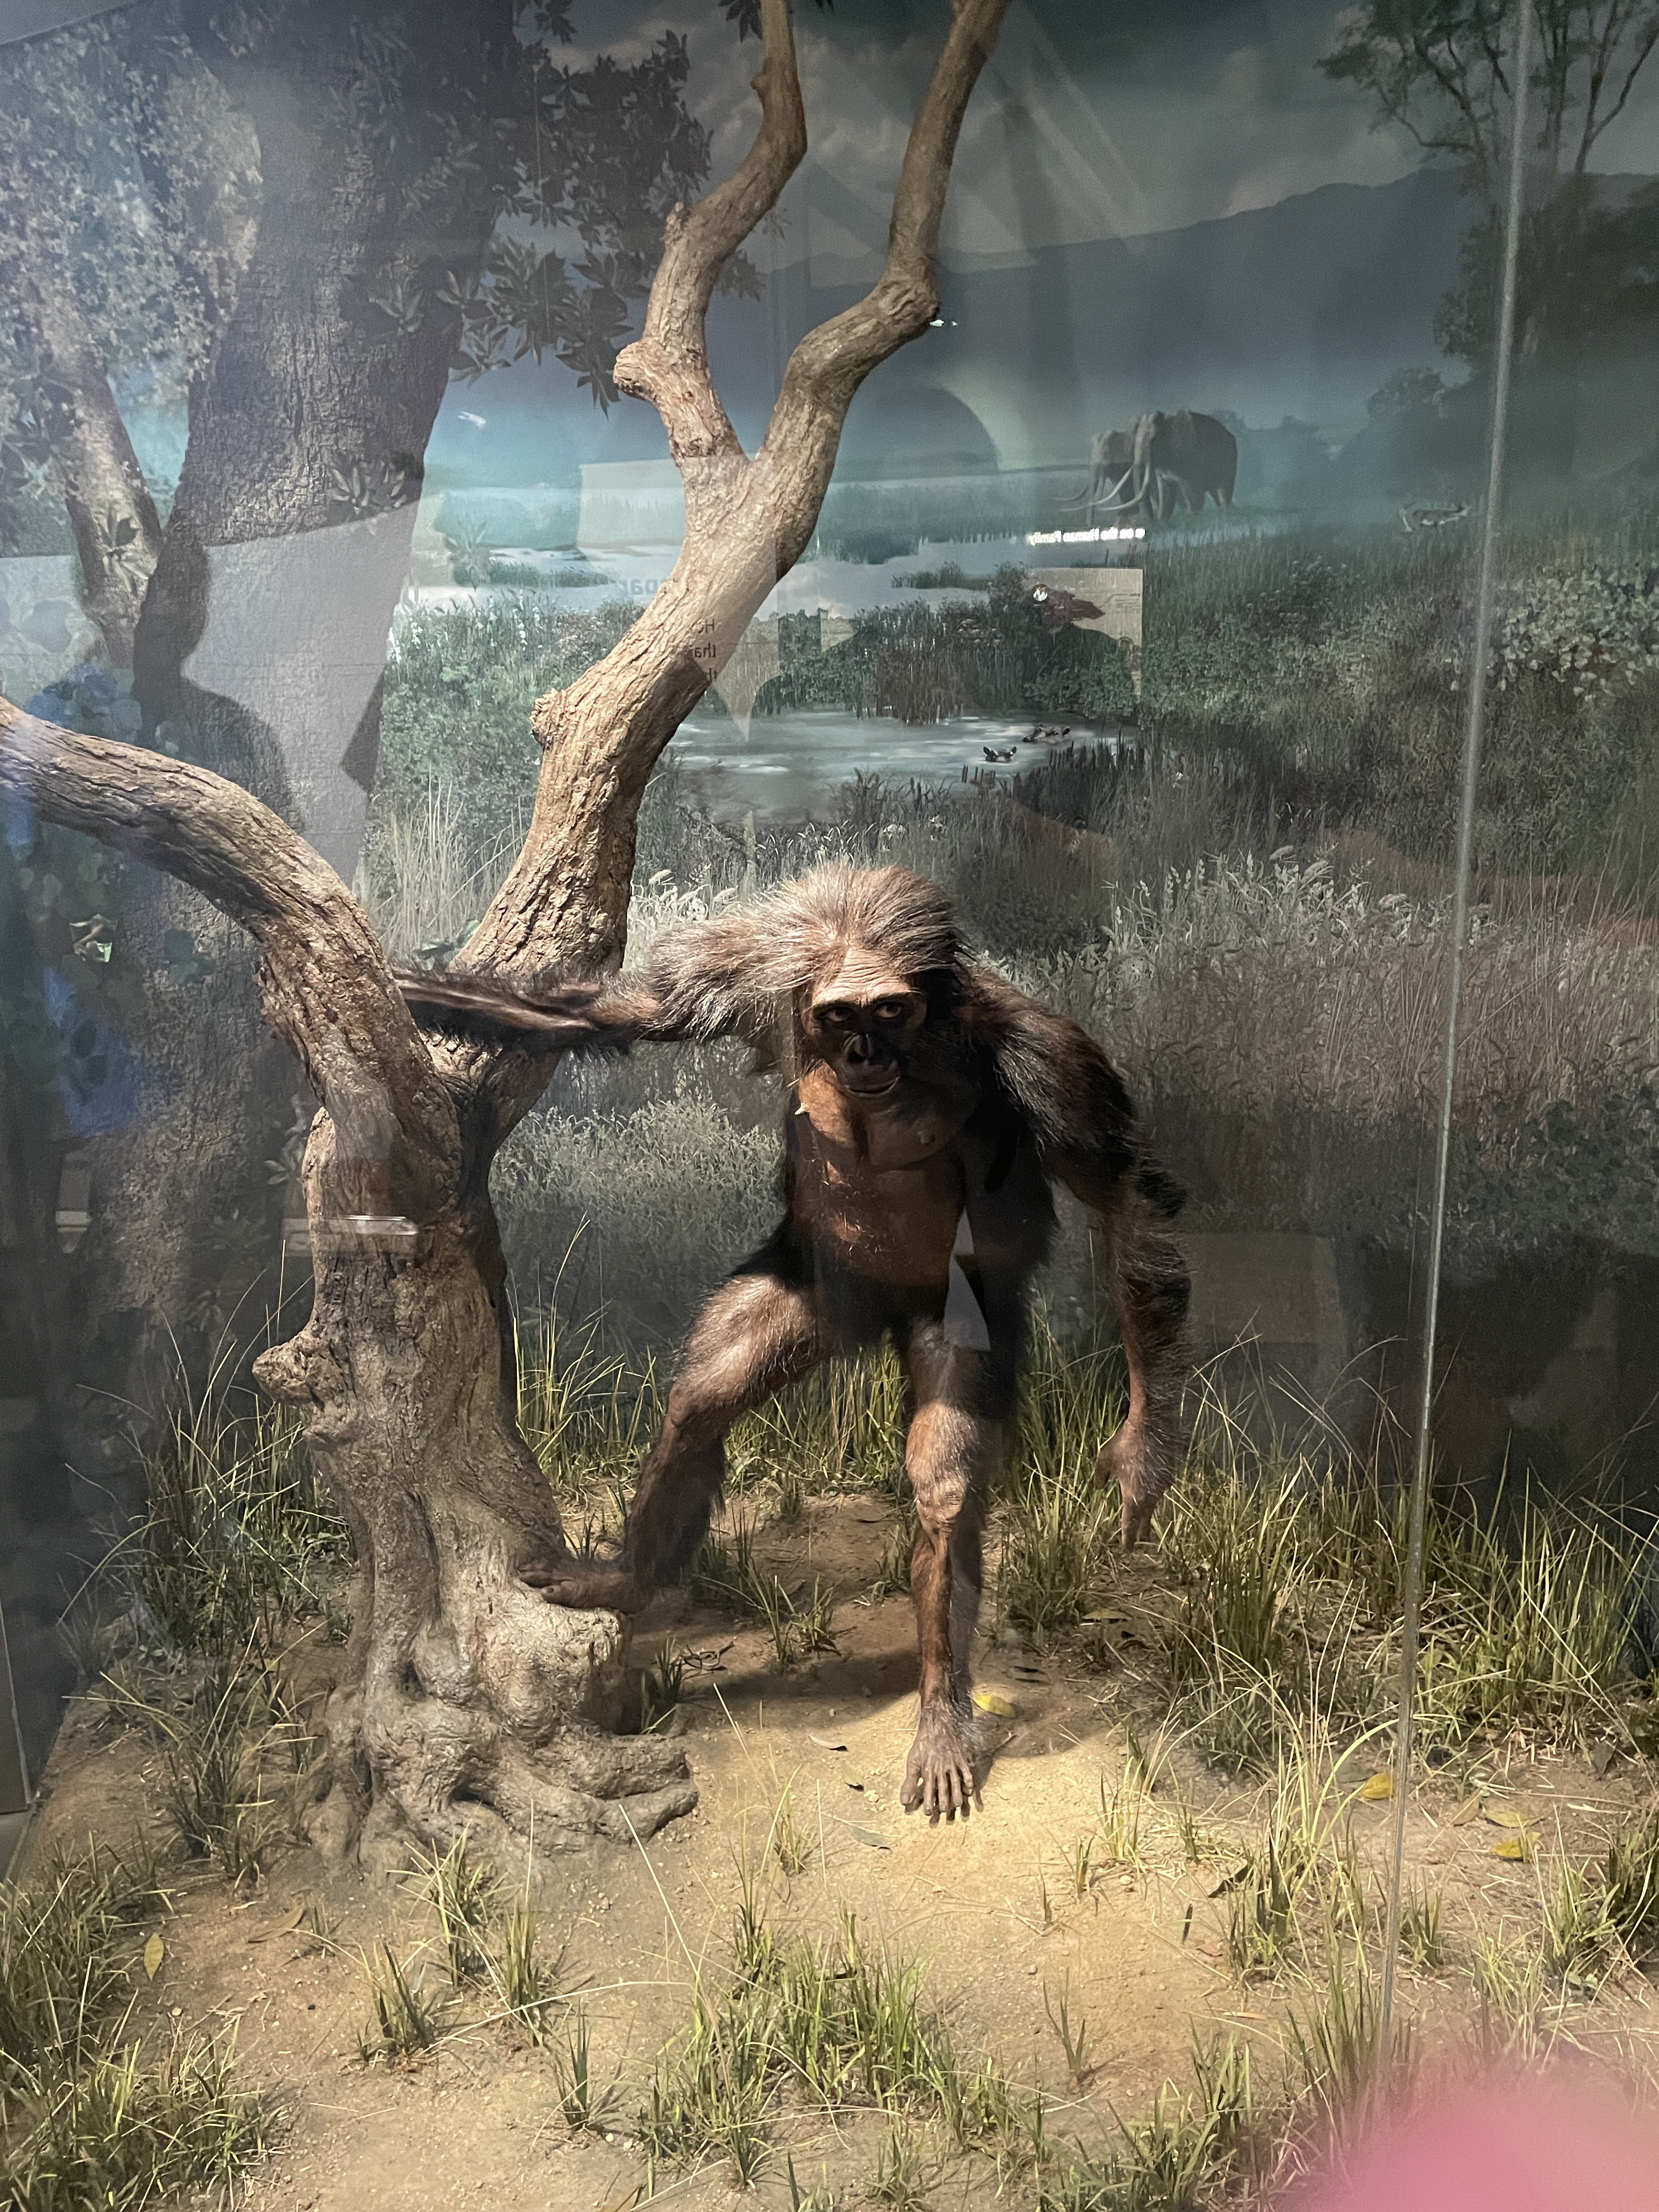 Human Origin Exhibit in the Natural History Museum in Washington, D.C.